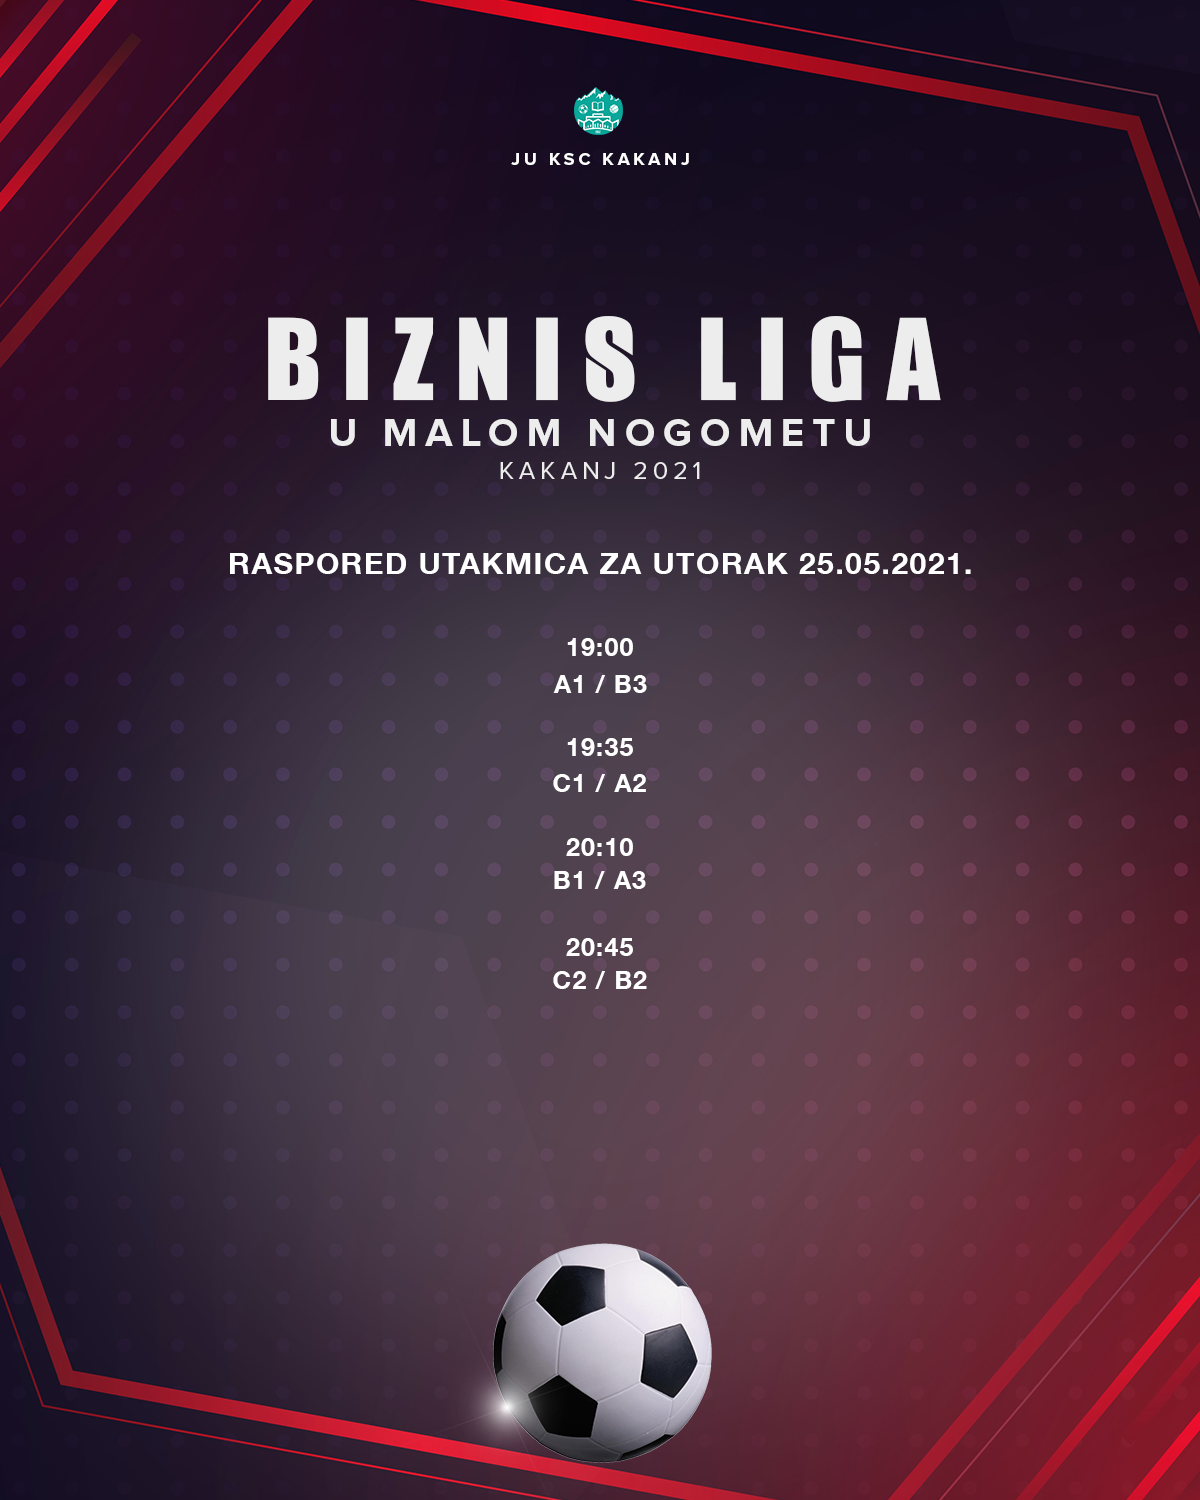 Raspored utakmica za danas 25.05.2021. – Biznis liga “Kakanj 2021”